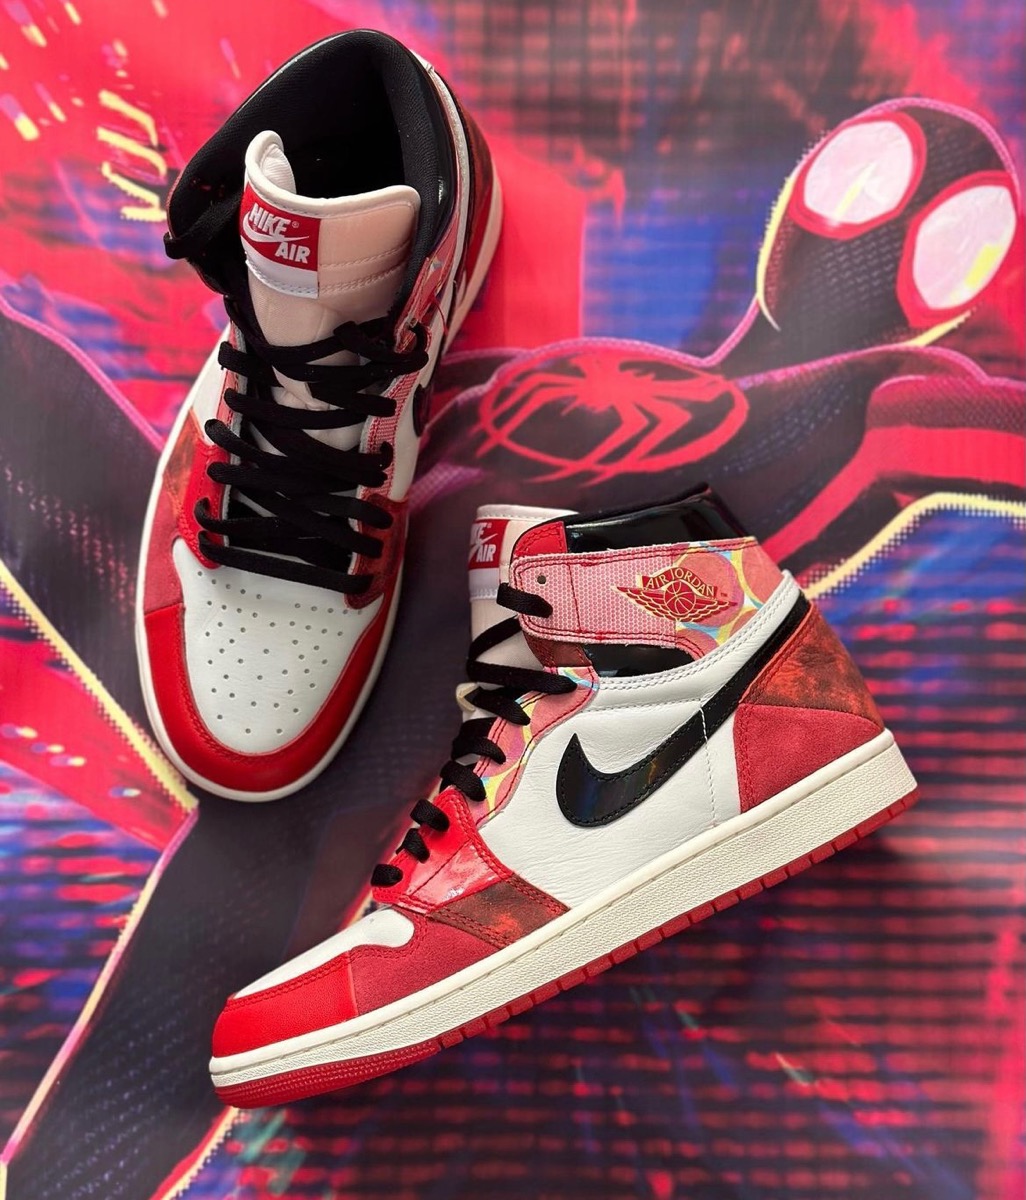 Spider-Man: Across the Spider-Verse × Nike Air Jordan 1 Retro High 